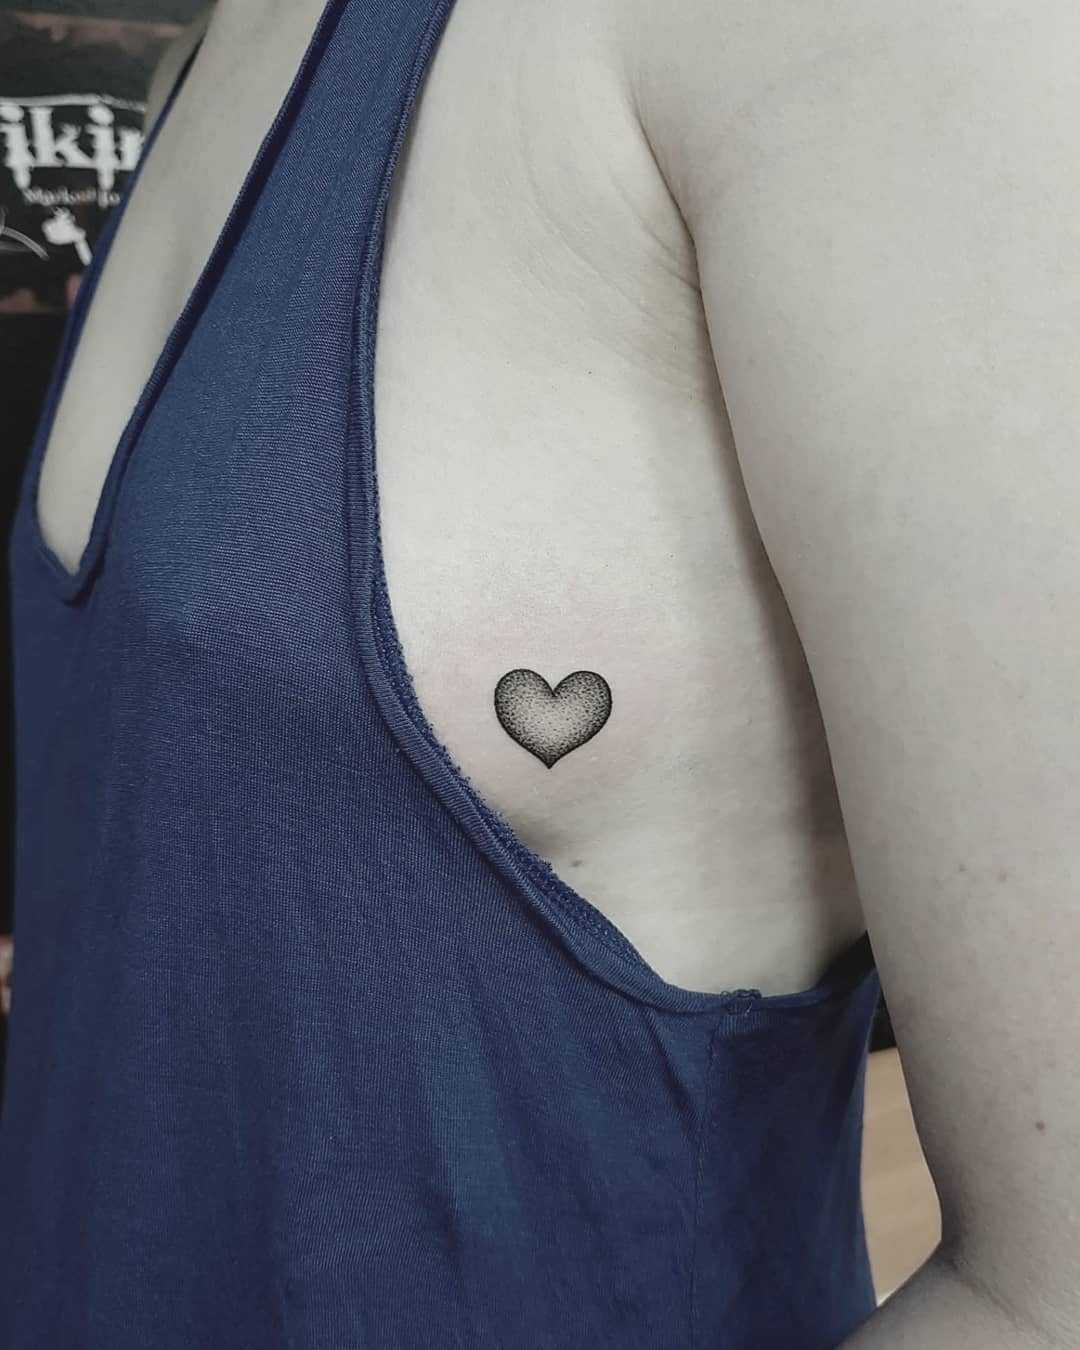 Dot-work heart tattoo on the side